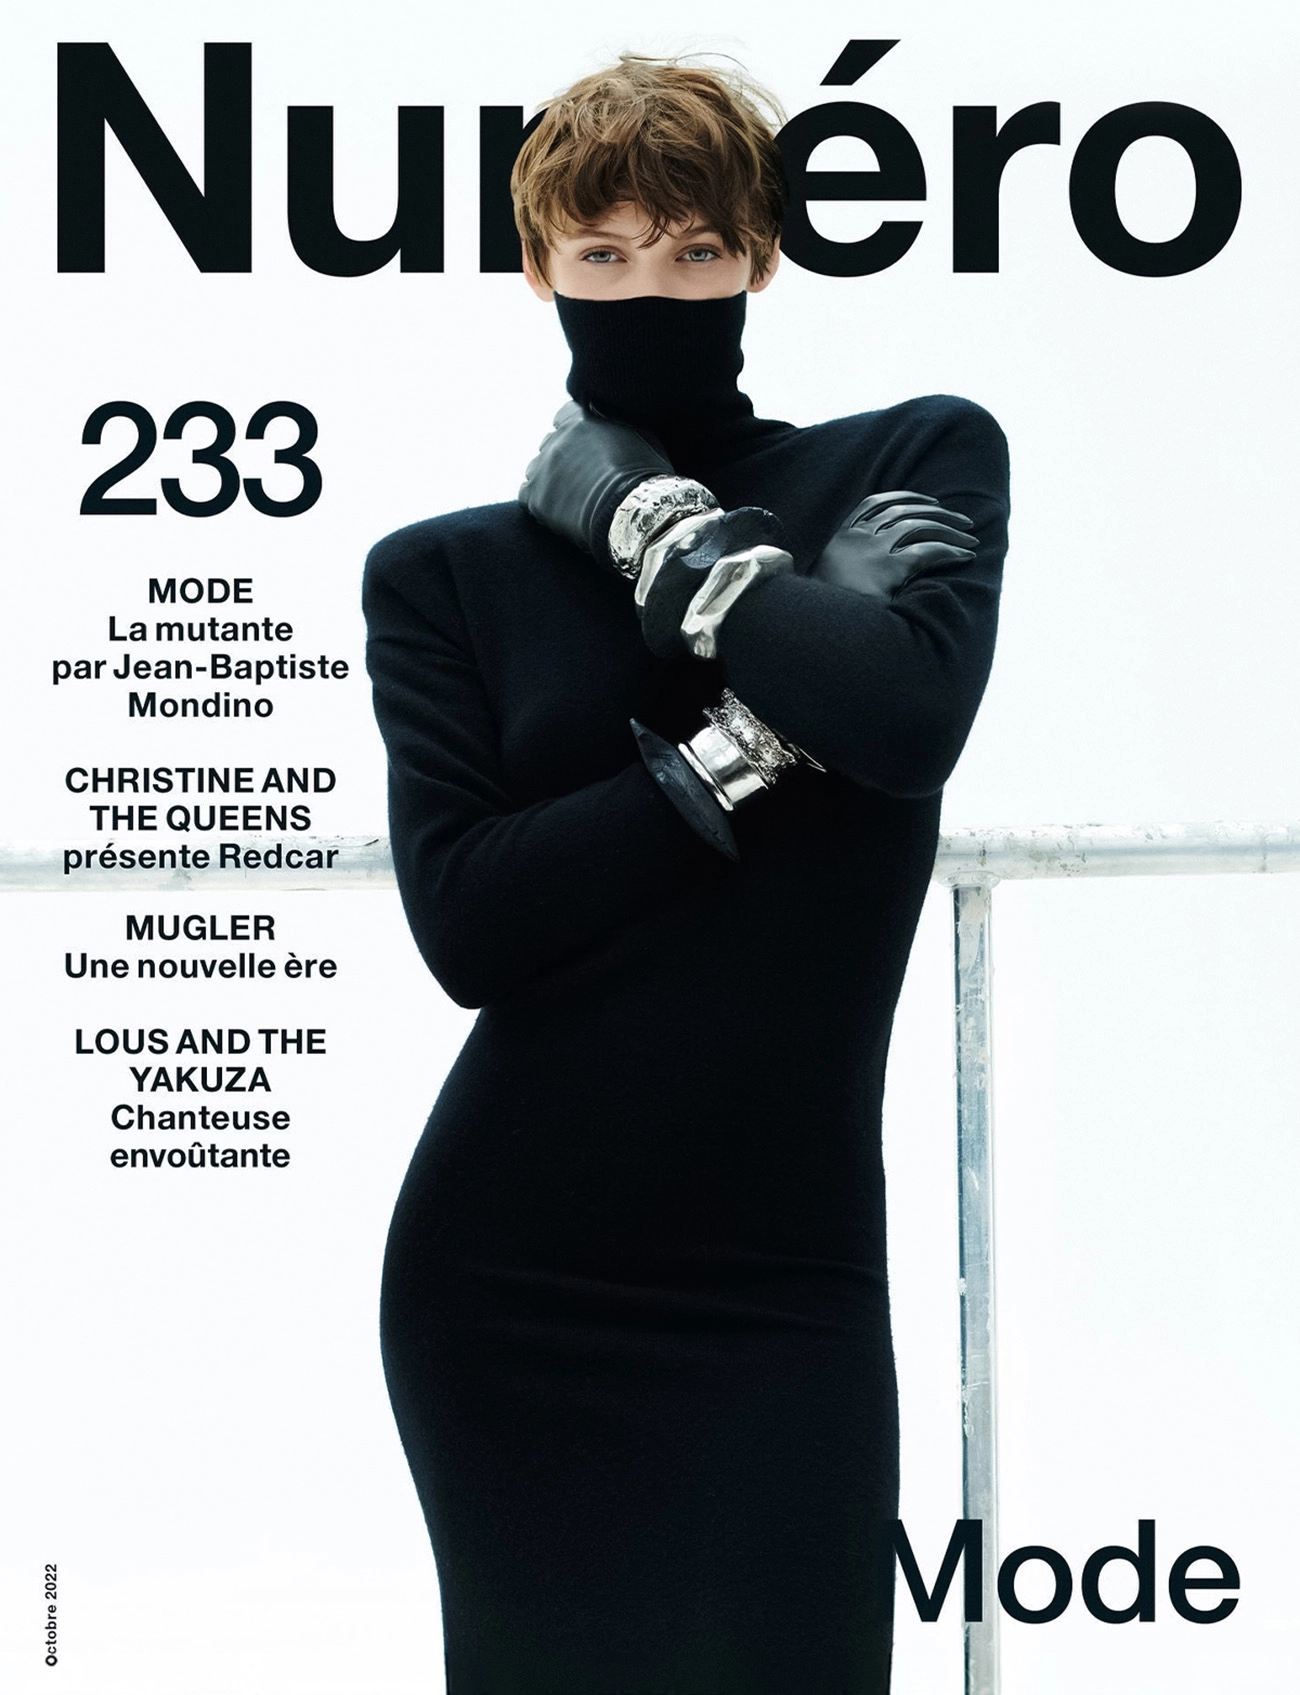 Cara Taylor covers Numéro October 2022 by Jean-Baptiste Mondino